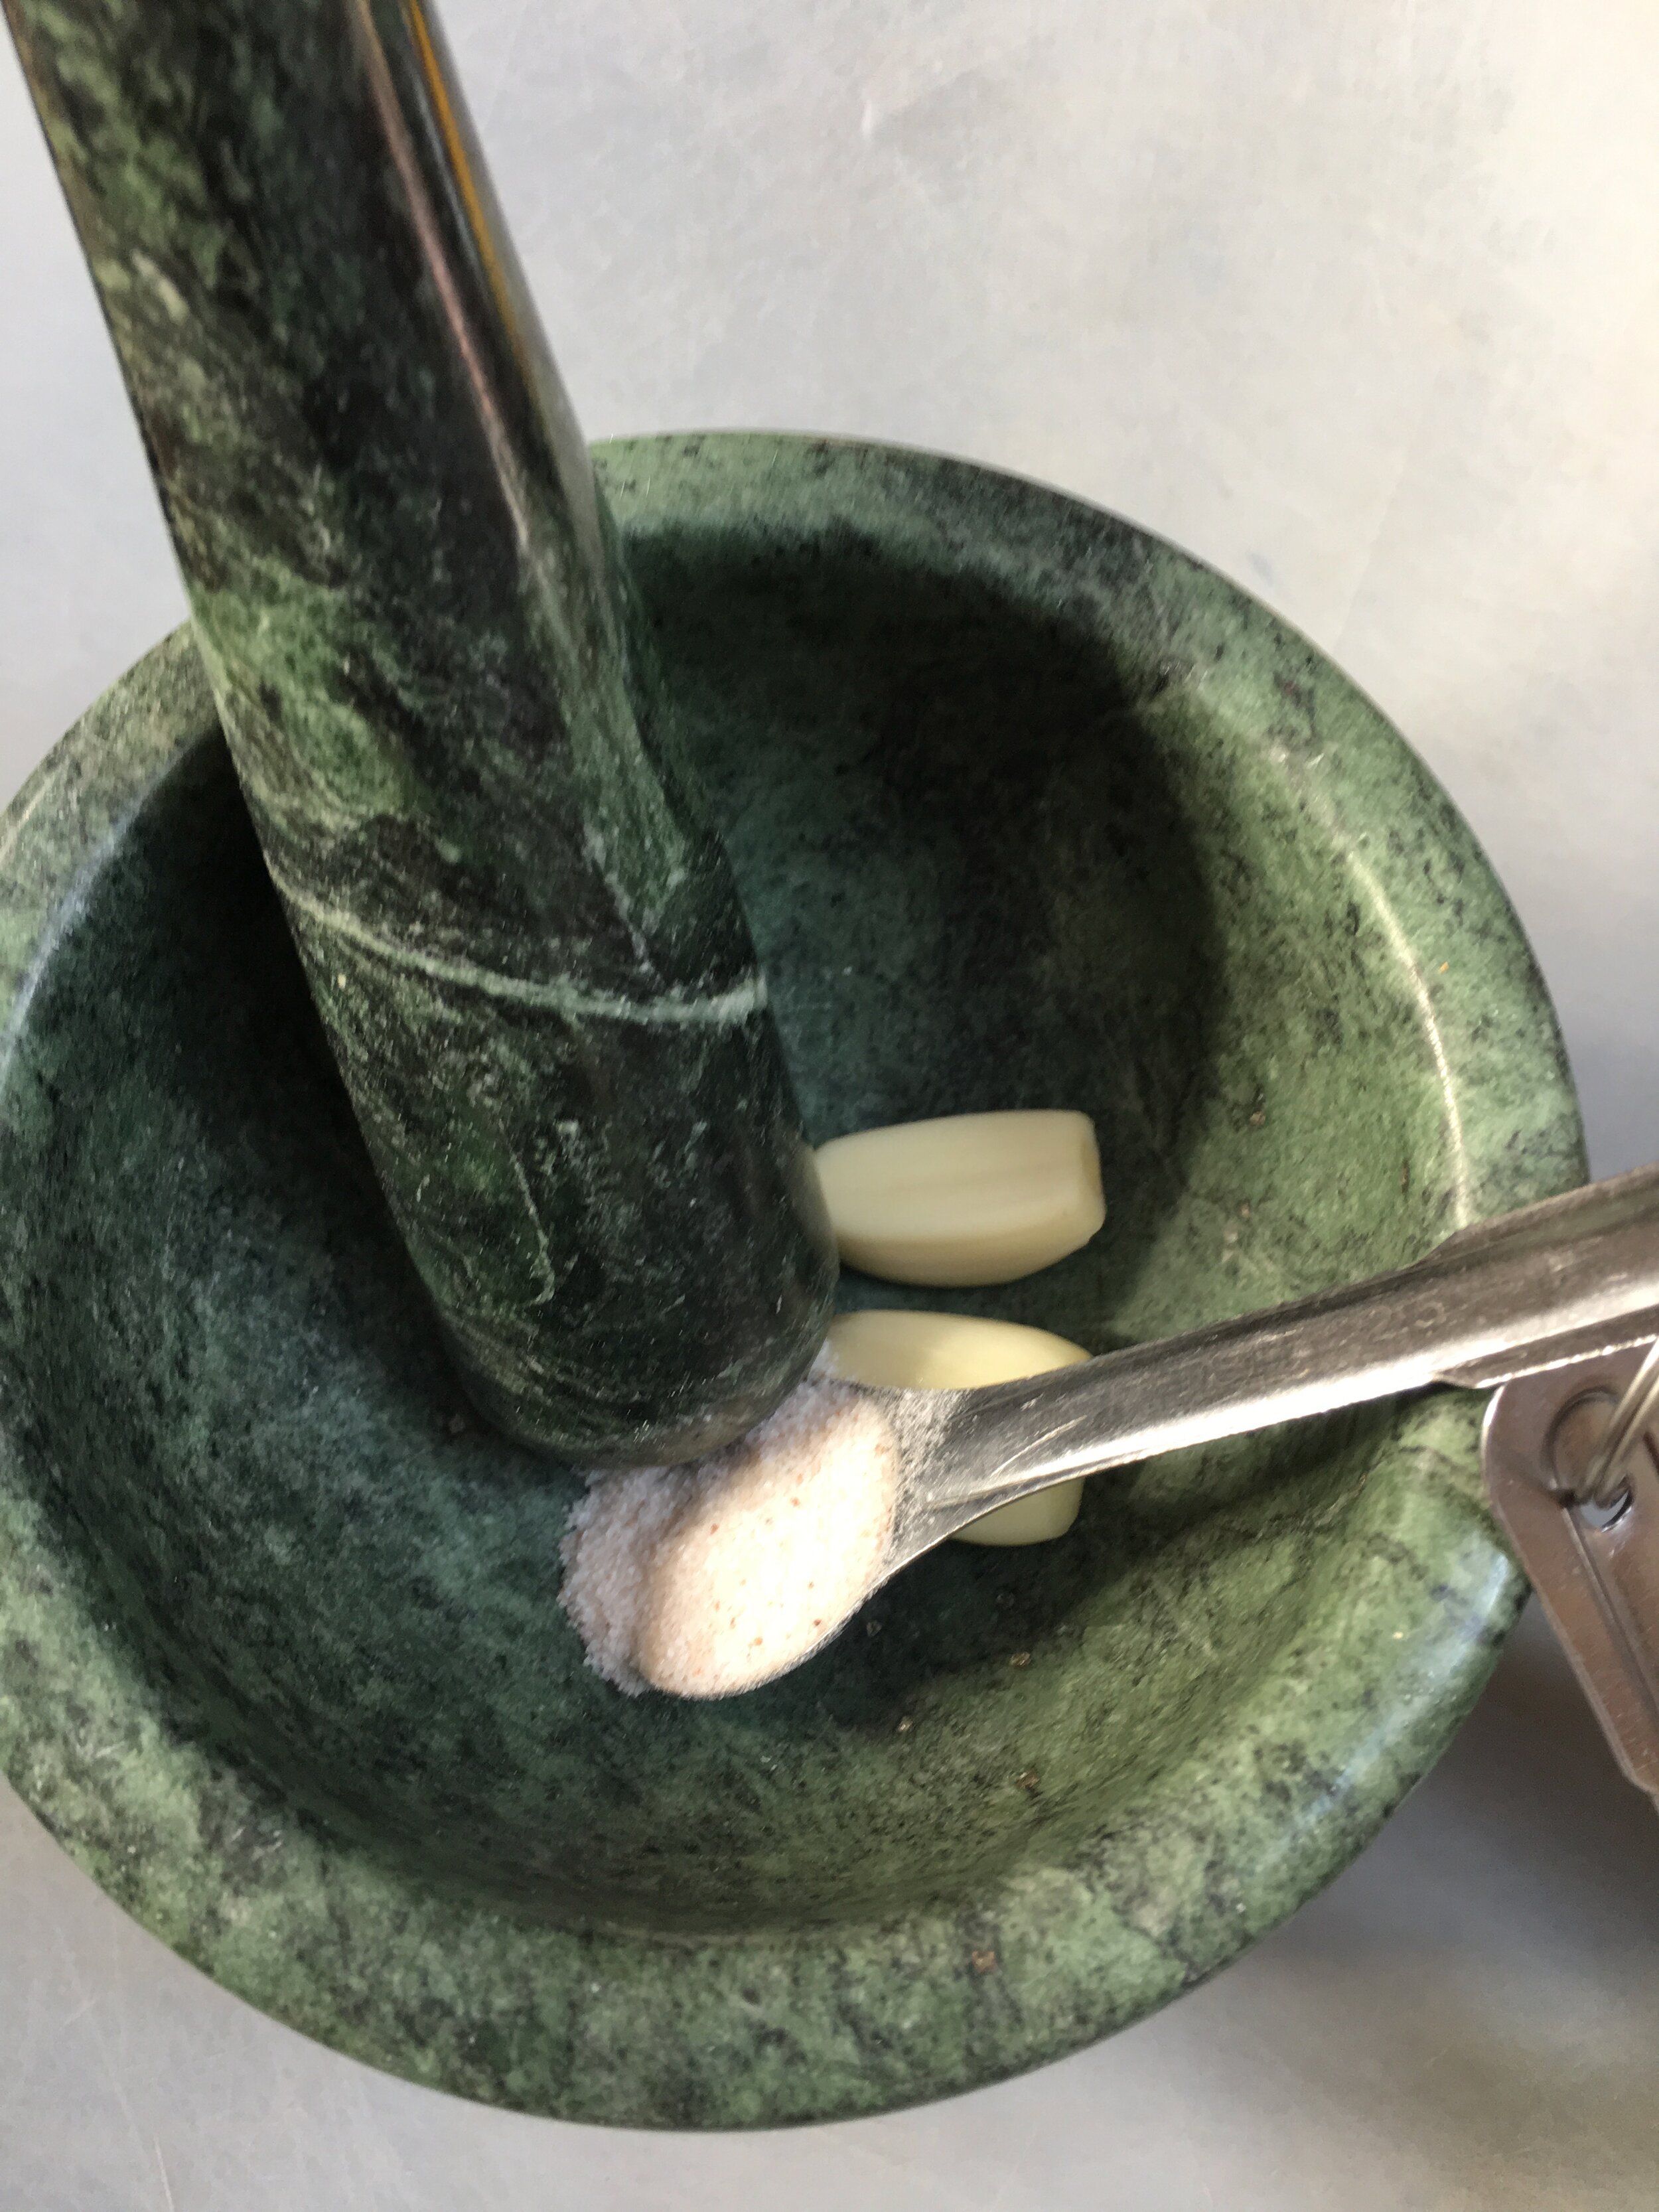 garlic pestle2.jpg